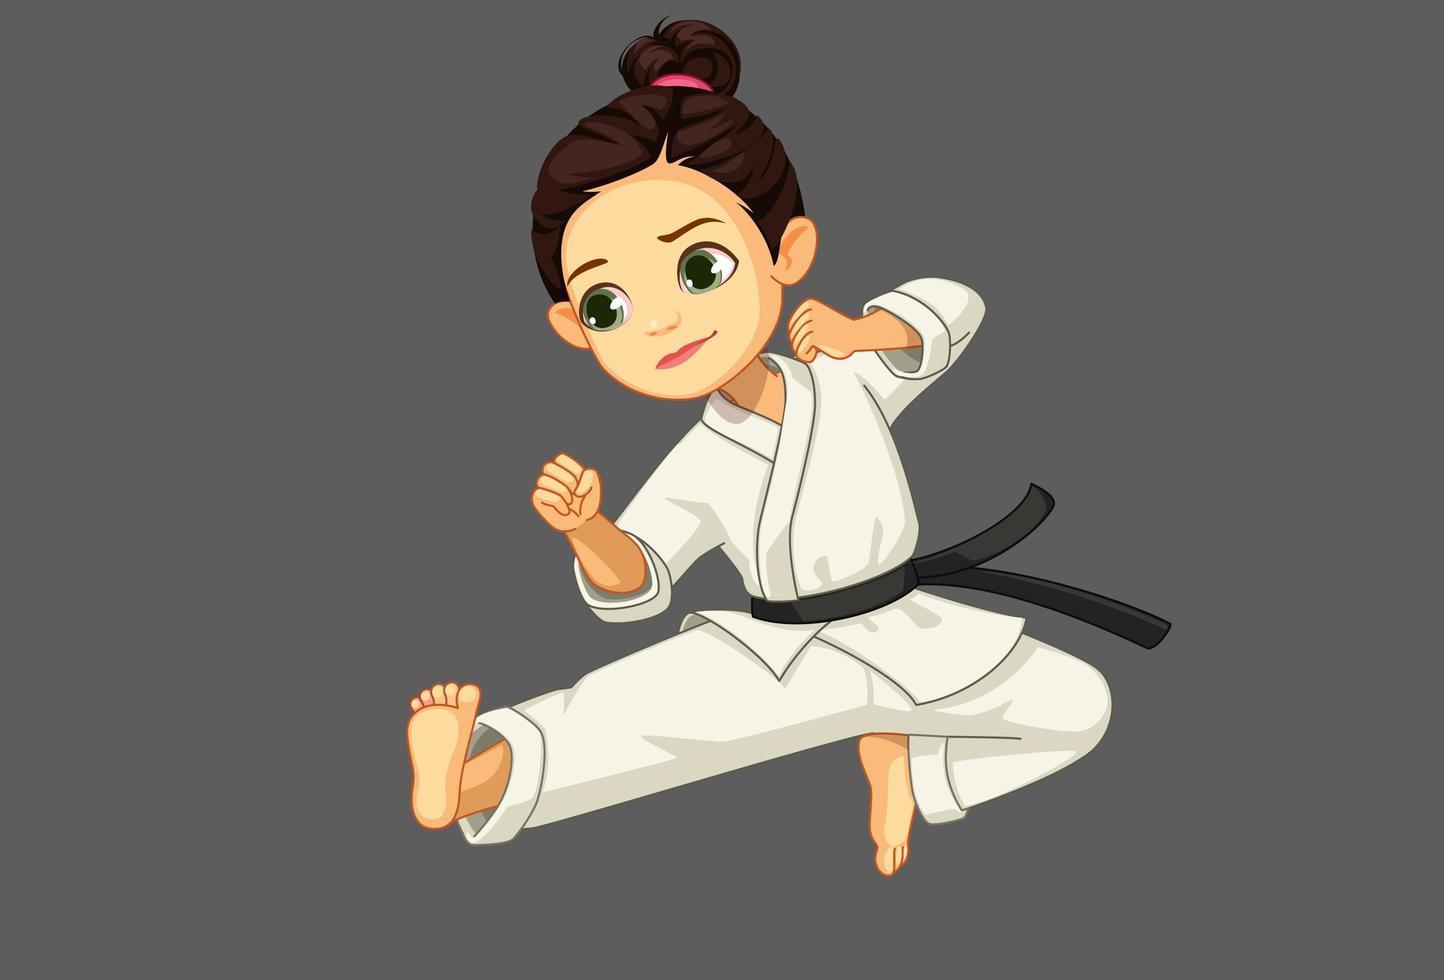 Cute little karate girl in karate pose vector